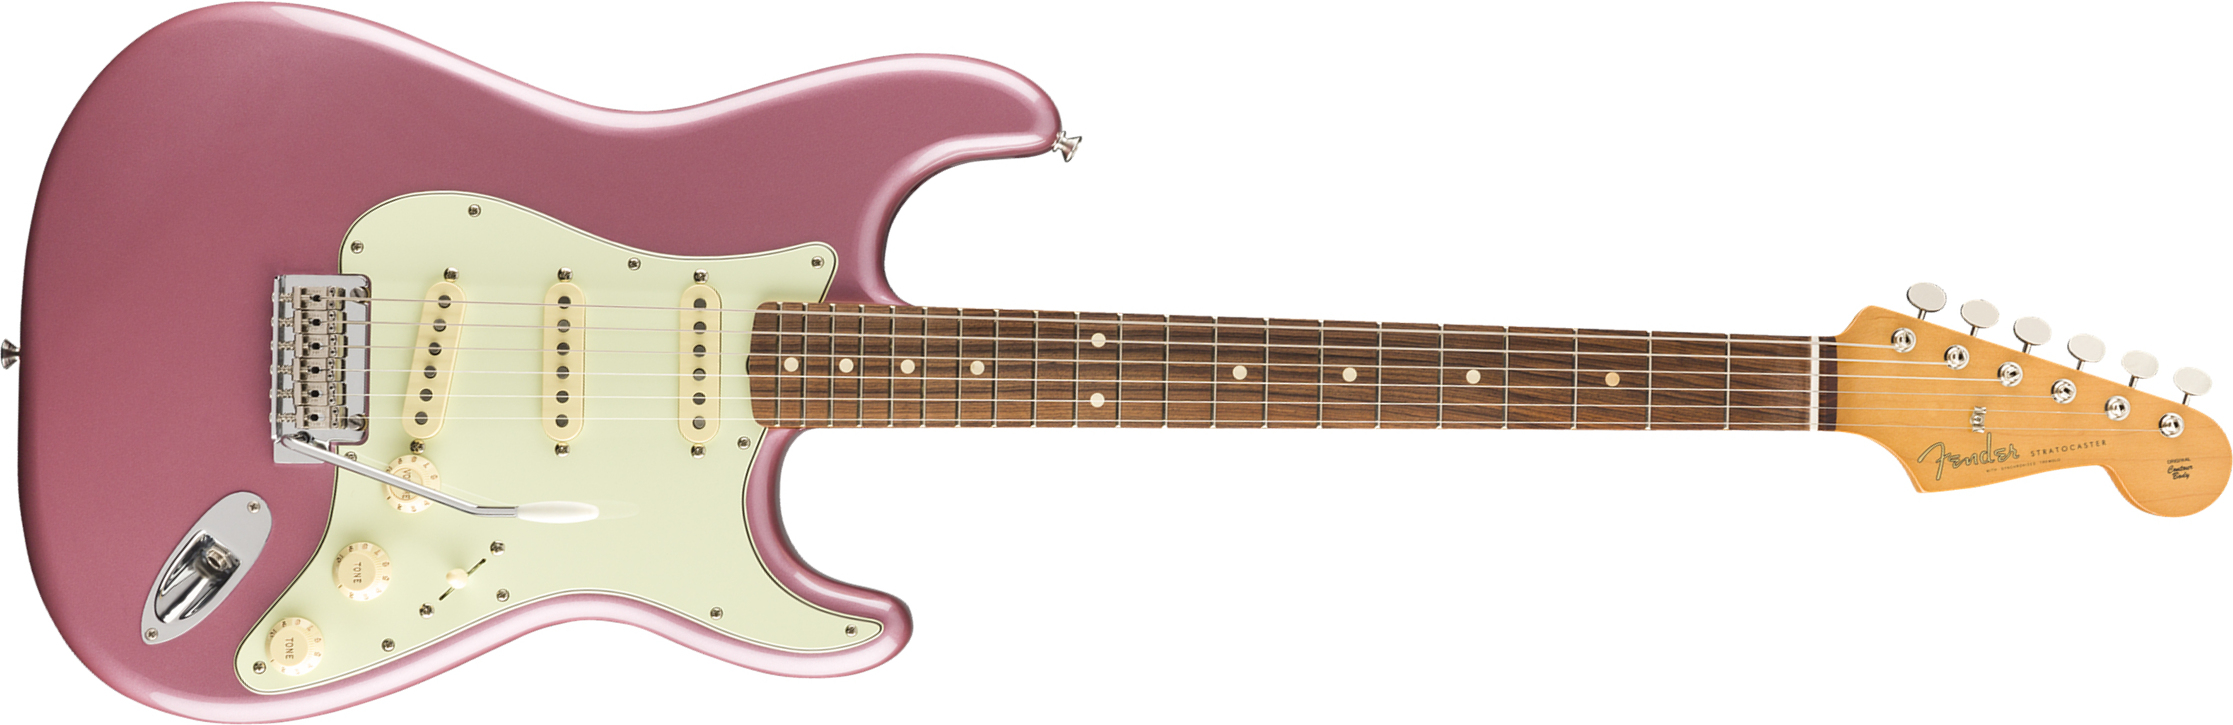 Fender Strat 60s Vintera Modified Mex Mn - Burgundy Mist - Str shape electric guitar - Main picture